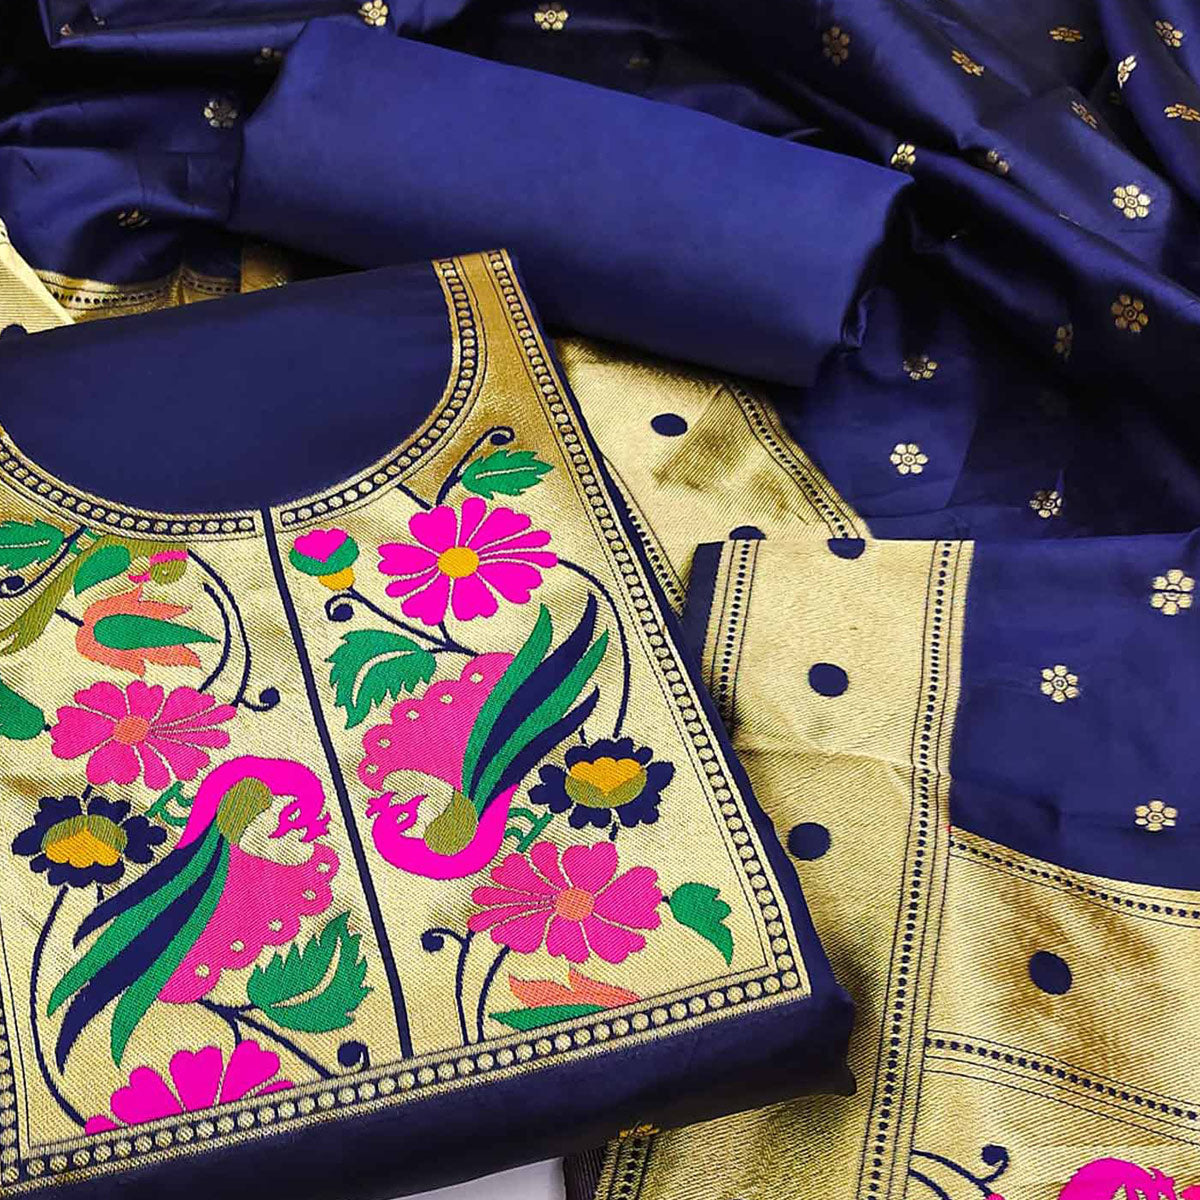 PaithaniHUB | Saree blouse designs, Party wear dresses, Saree dress